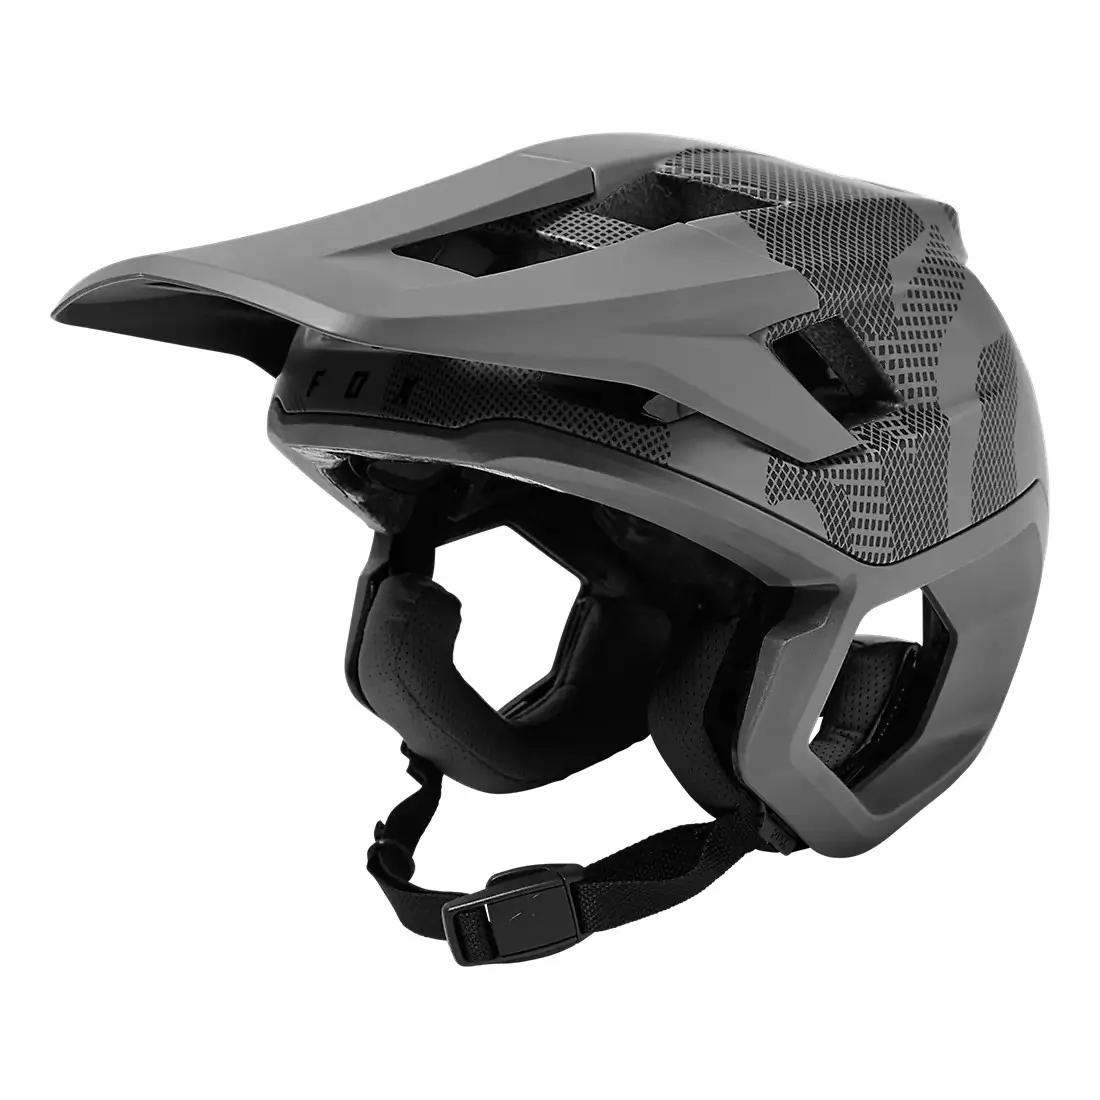 Dropframe Pro Camo Enduro Helmet Gray Camouflage Size M (54-56cm) #2